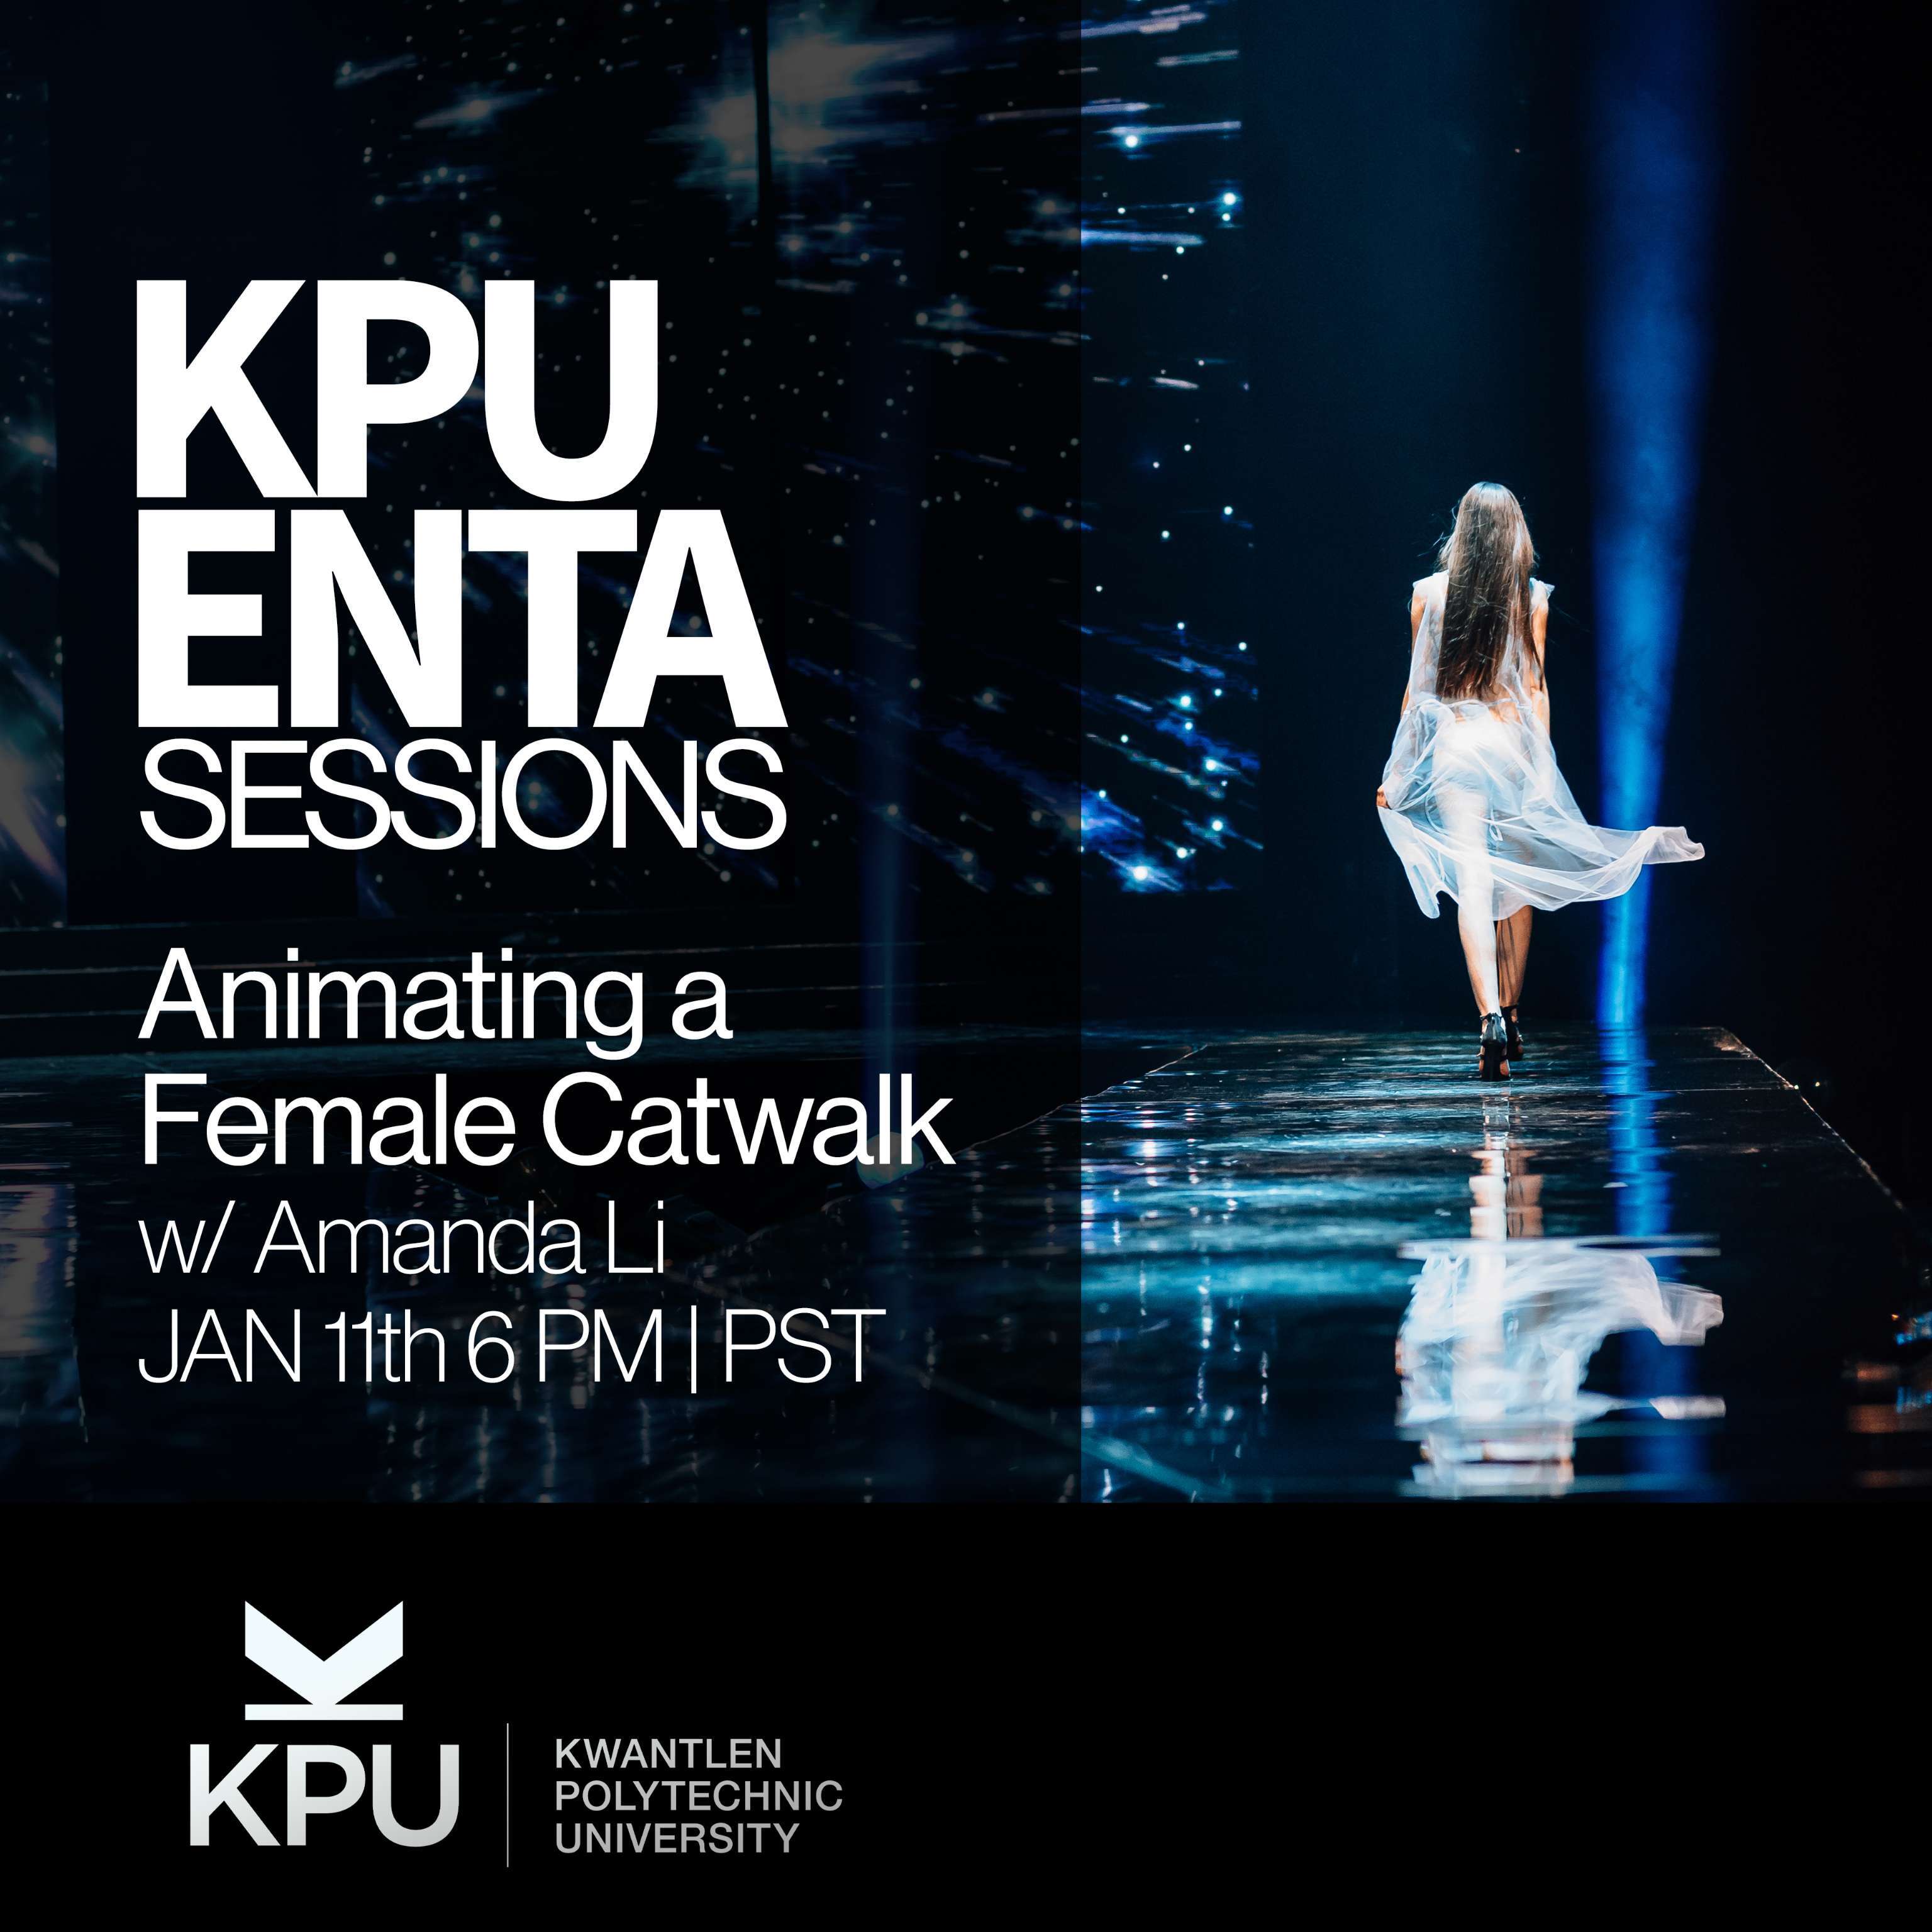 KPU ENTA Sessions: Animating a Female Catwalk with Amanda Li. Jan. 11th, 6:00 PM PST